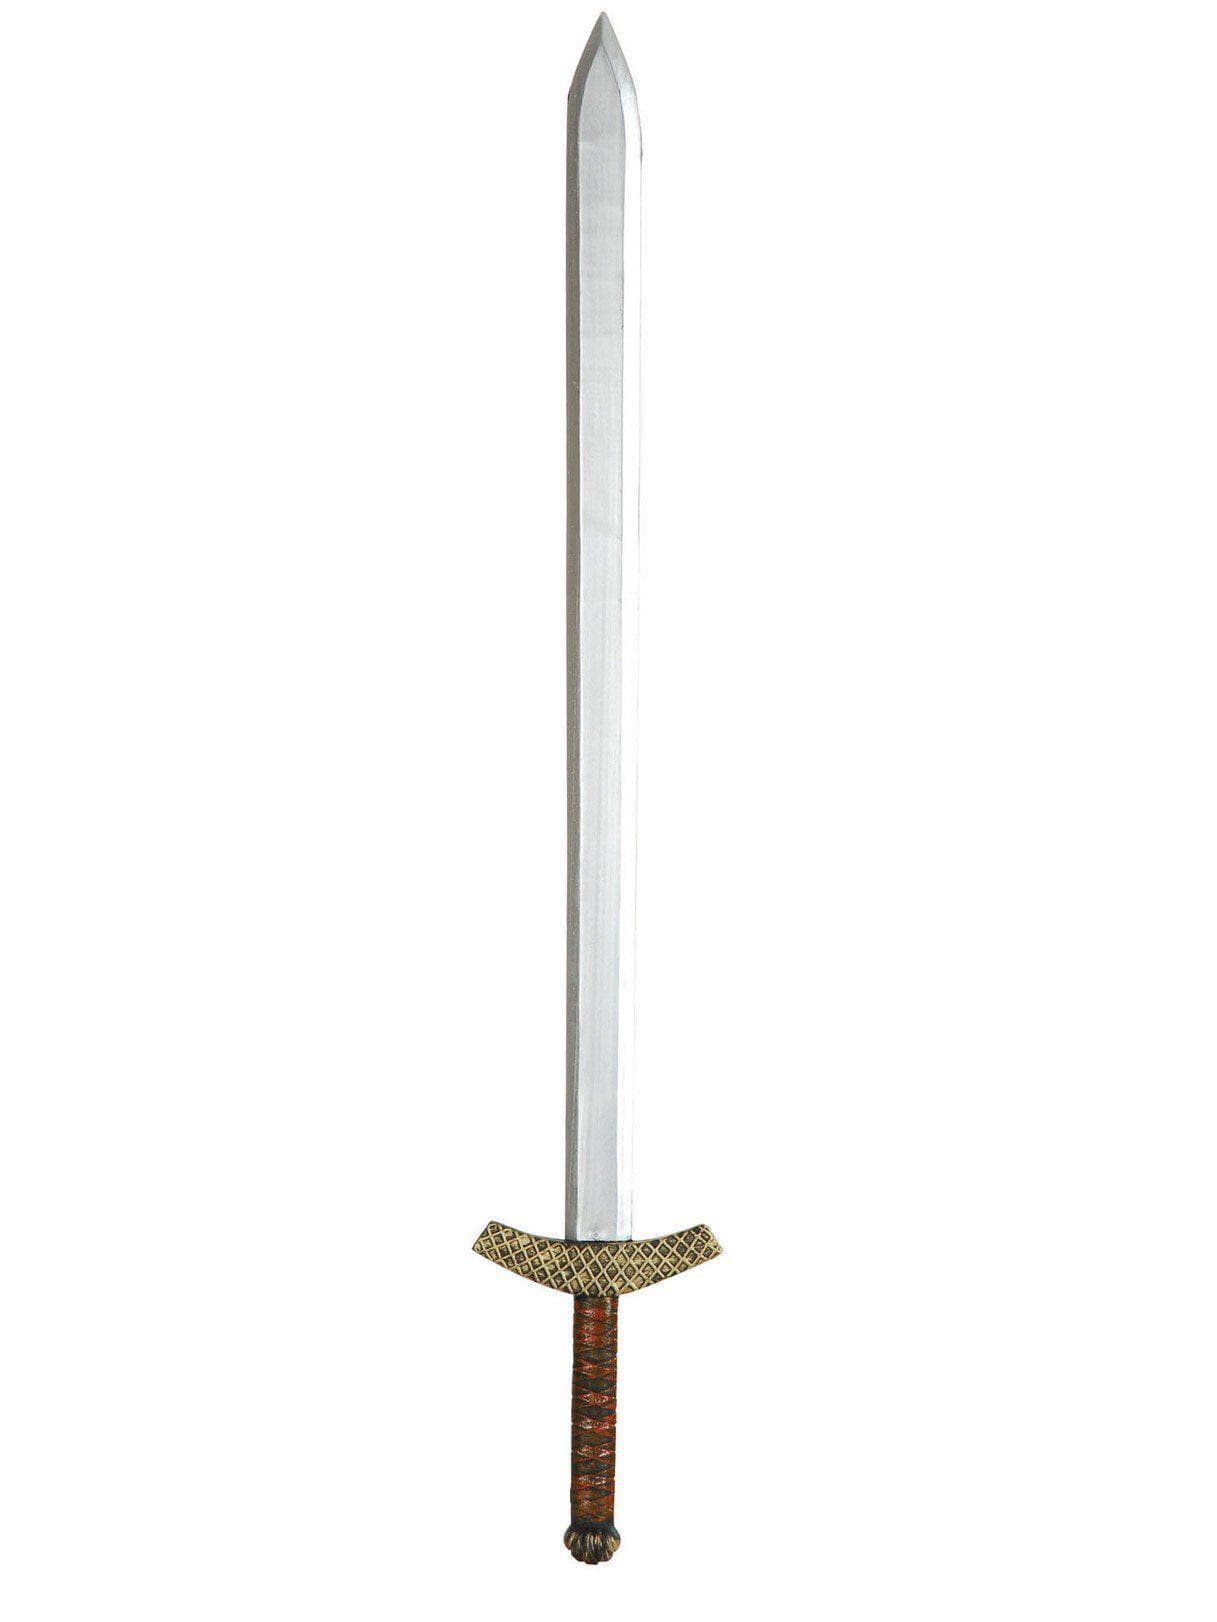 43" King Arthur Sword - costumes.com